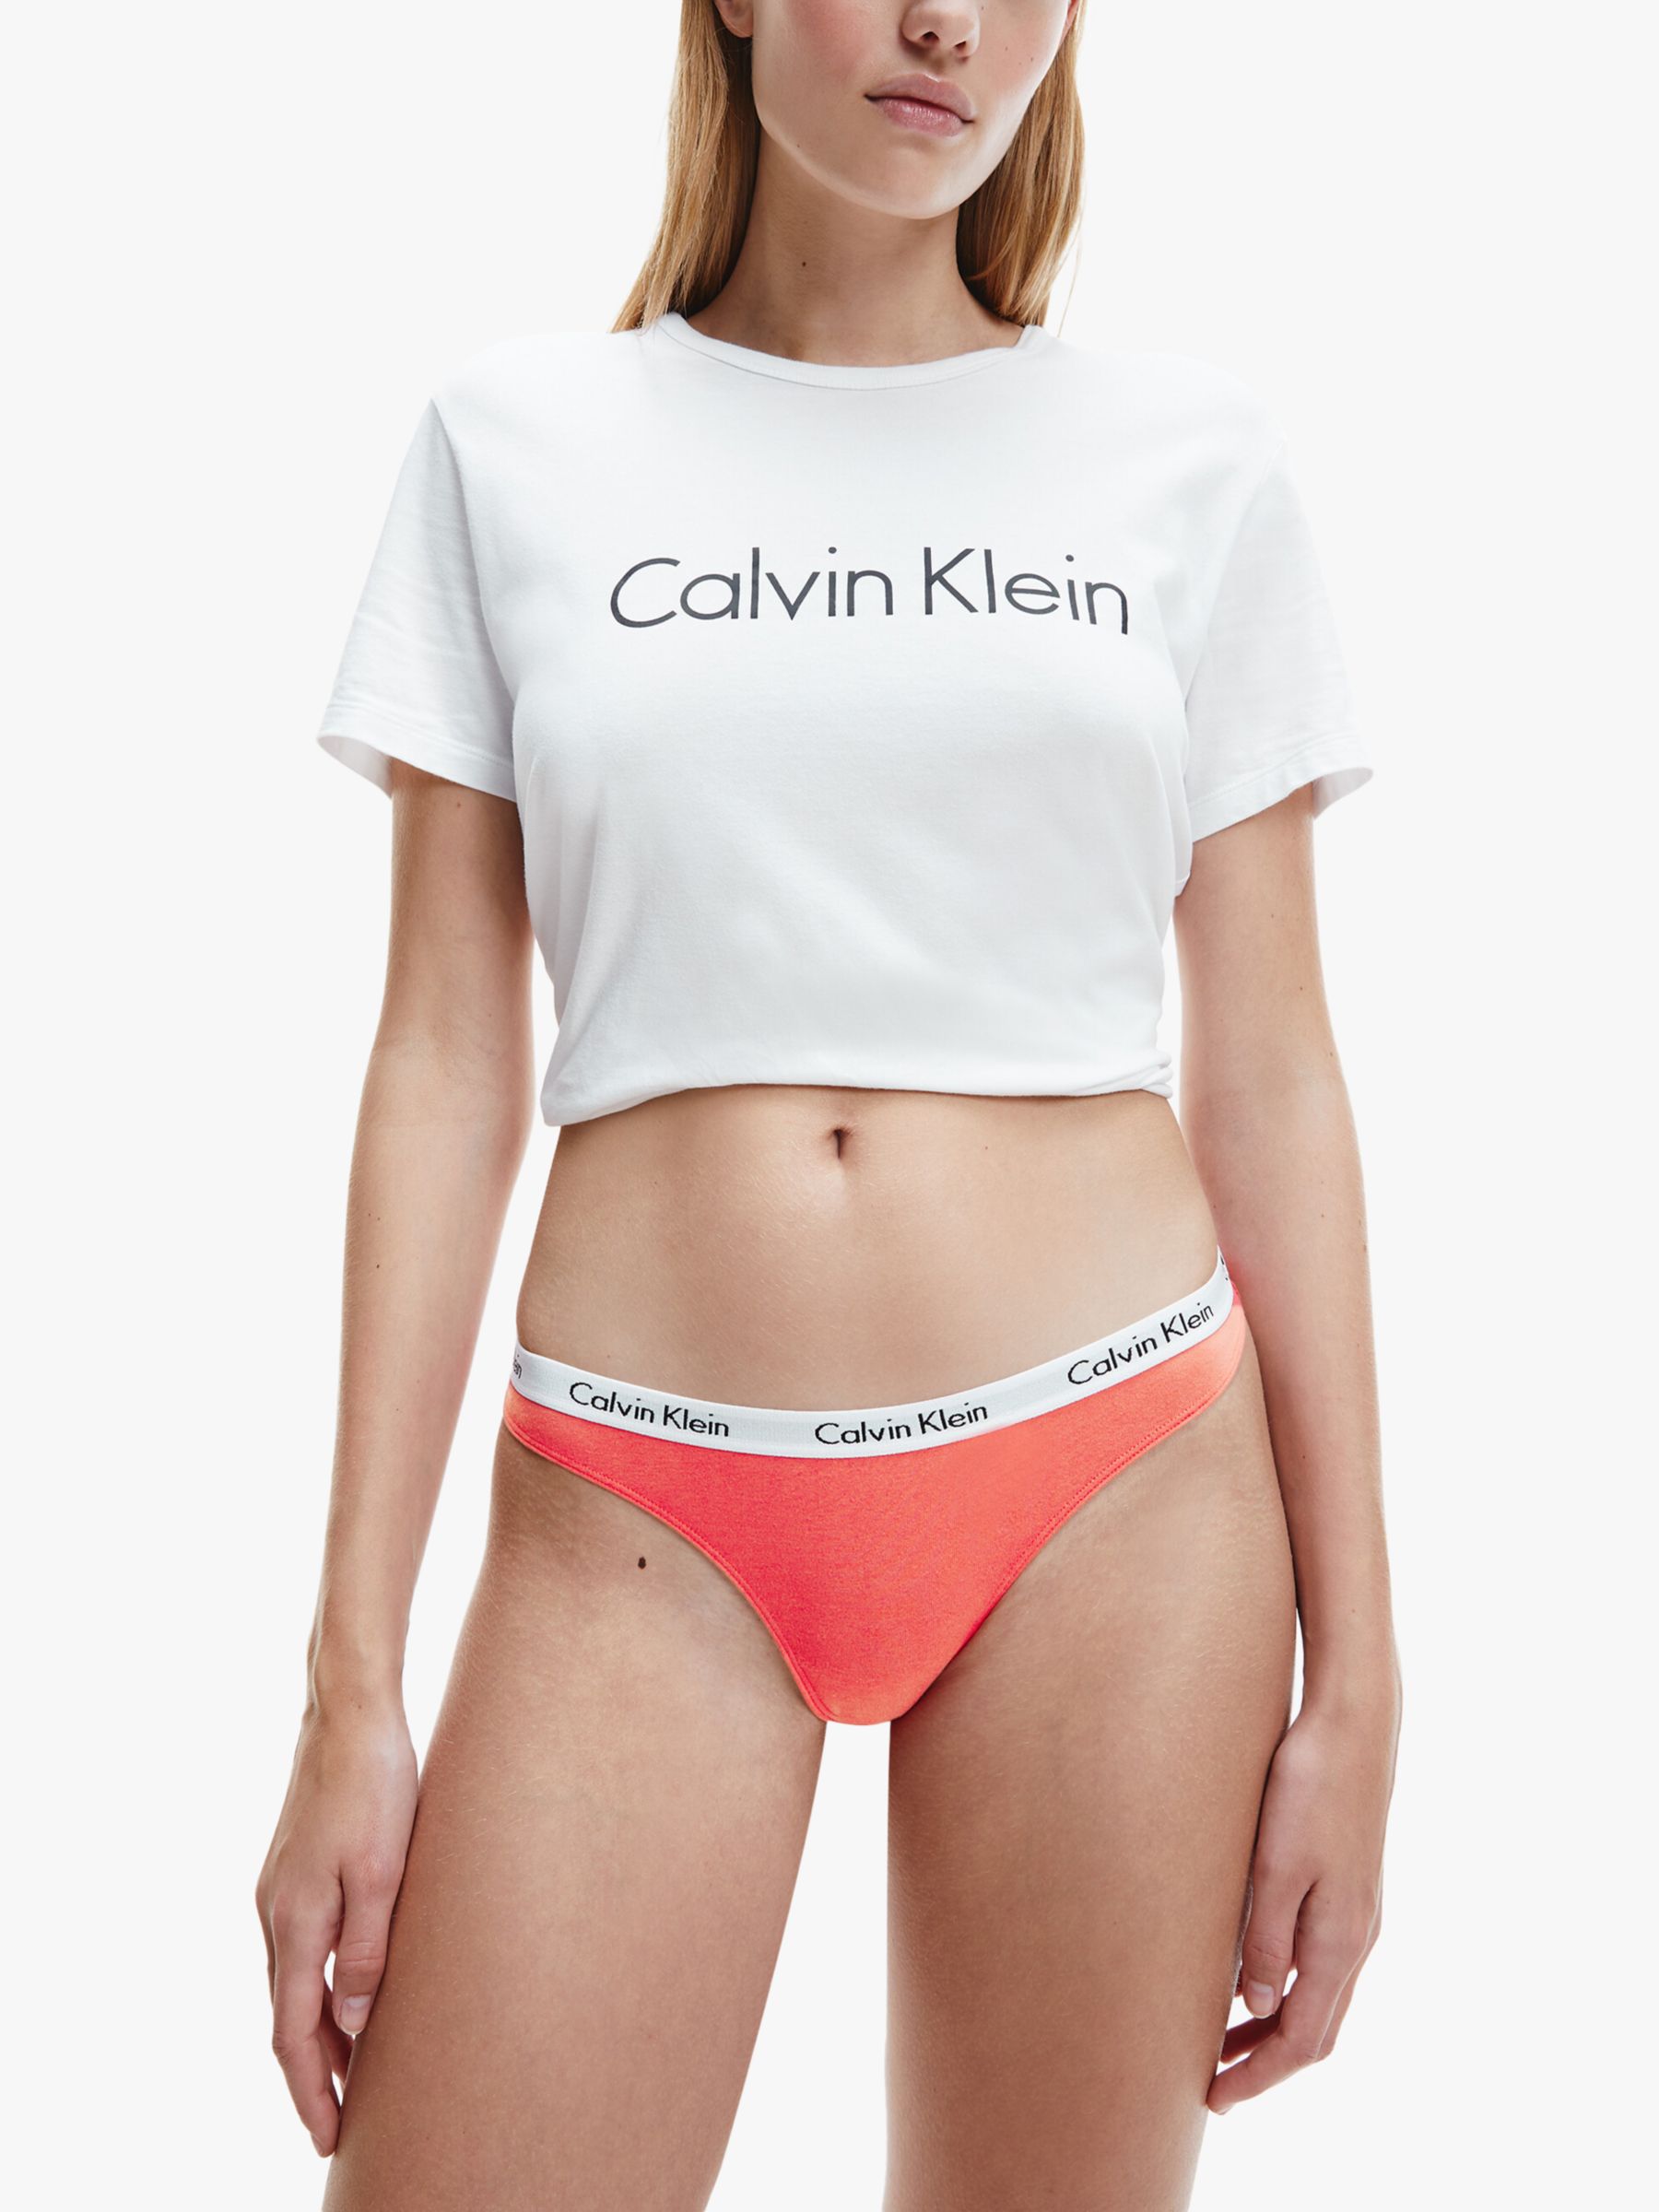 Calvin Klein - CAROUSEL THONG in White